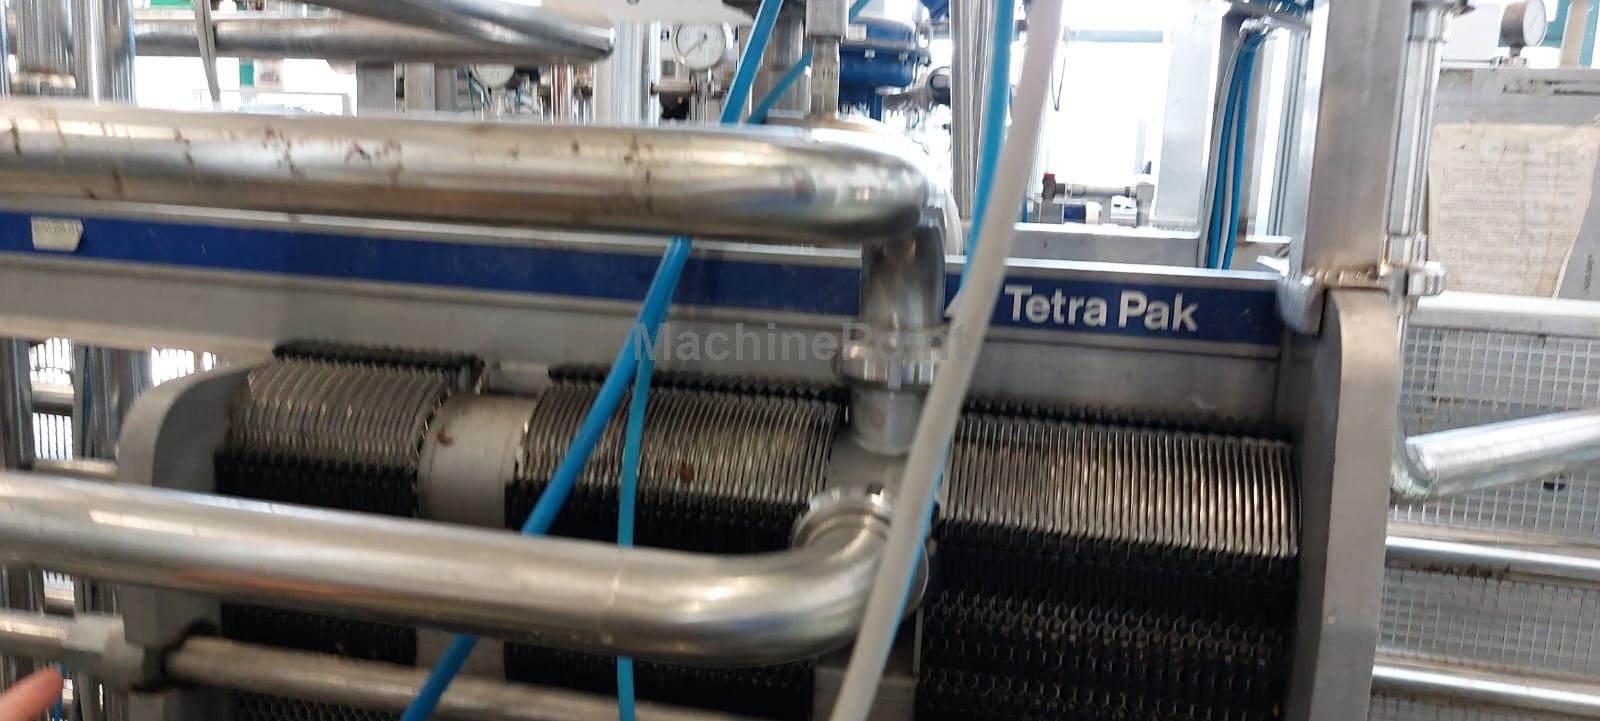 TETRA PAK - C6-SR - Used machine